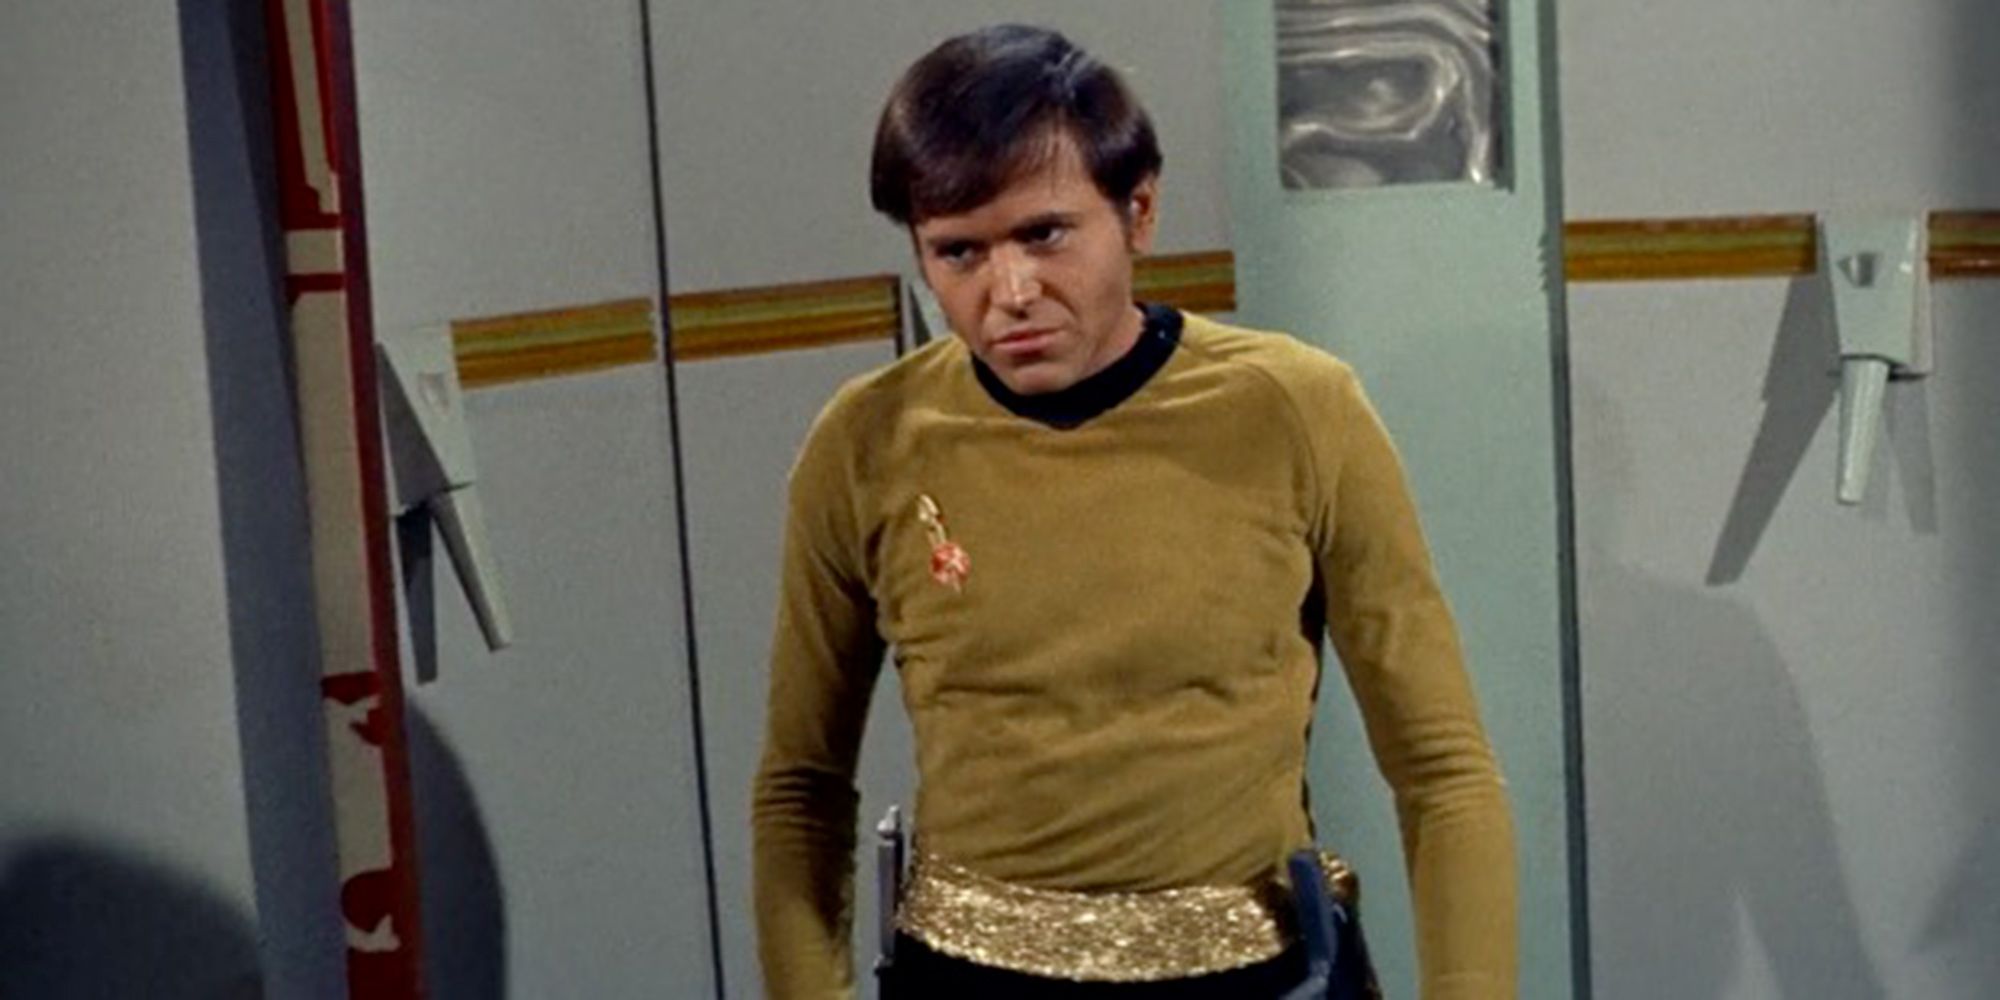 Walter Koenig as Pavel Chekov in Star Trek: TOS, looking world-weary